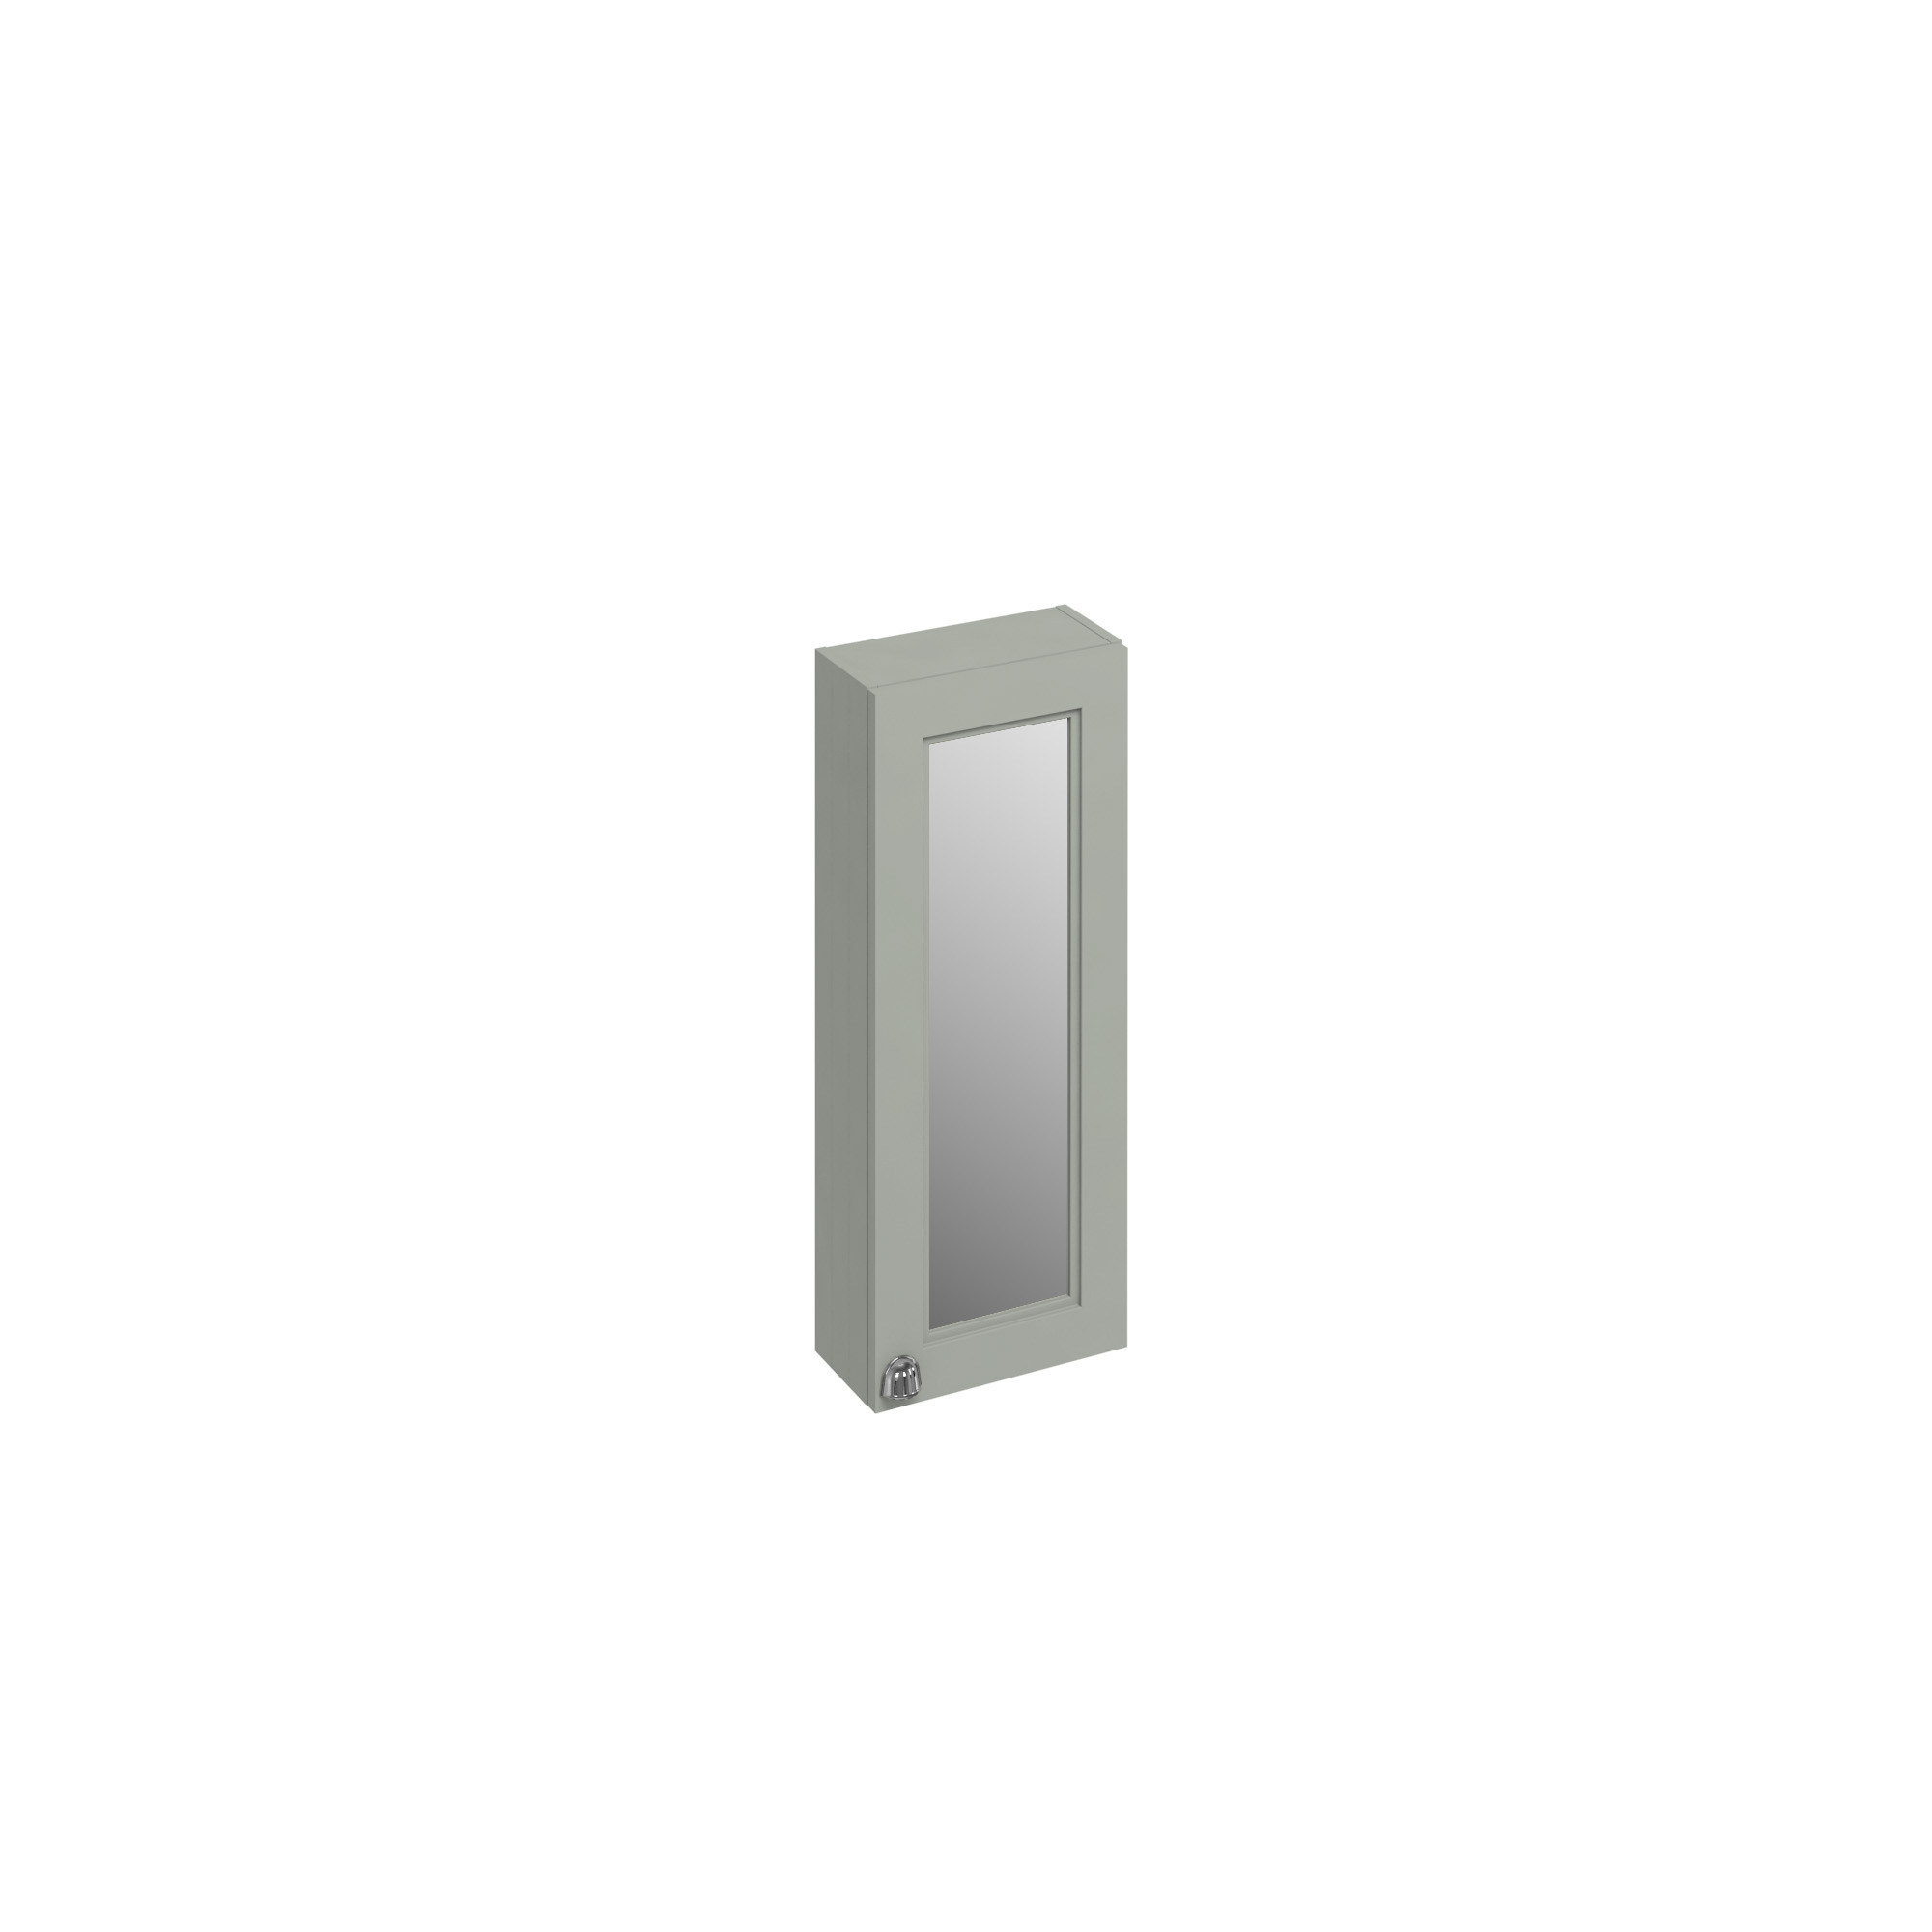 30cm Mirrored single door wall unit